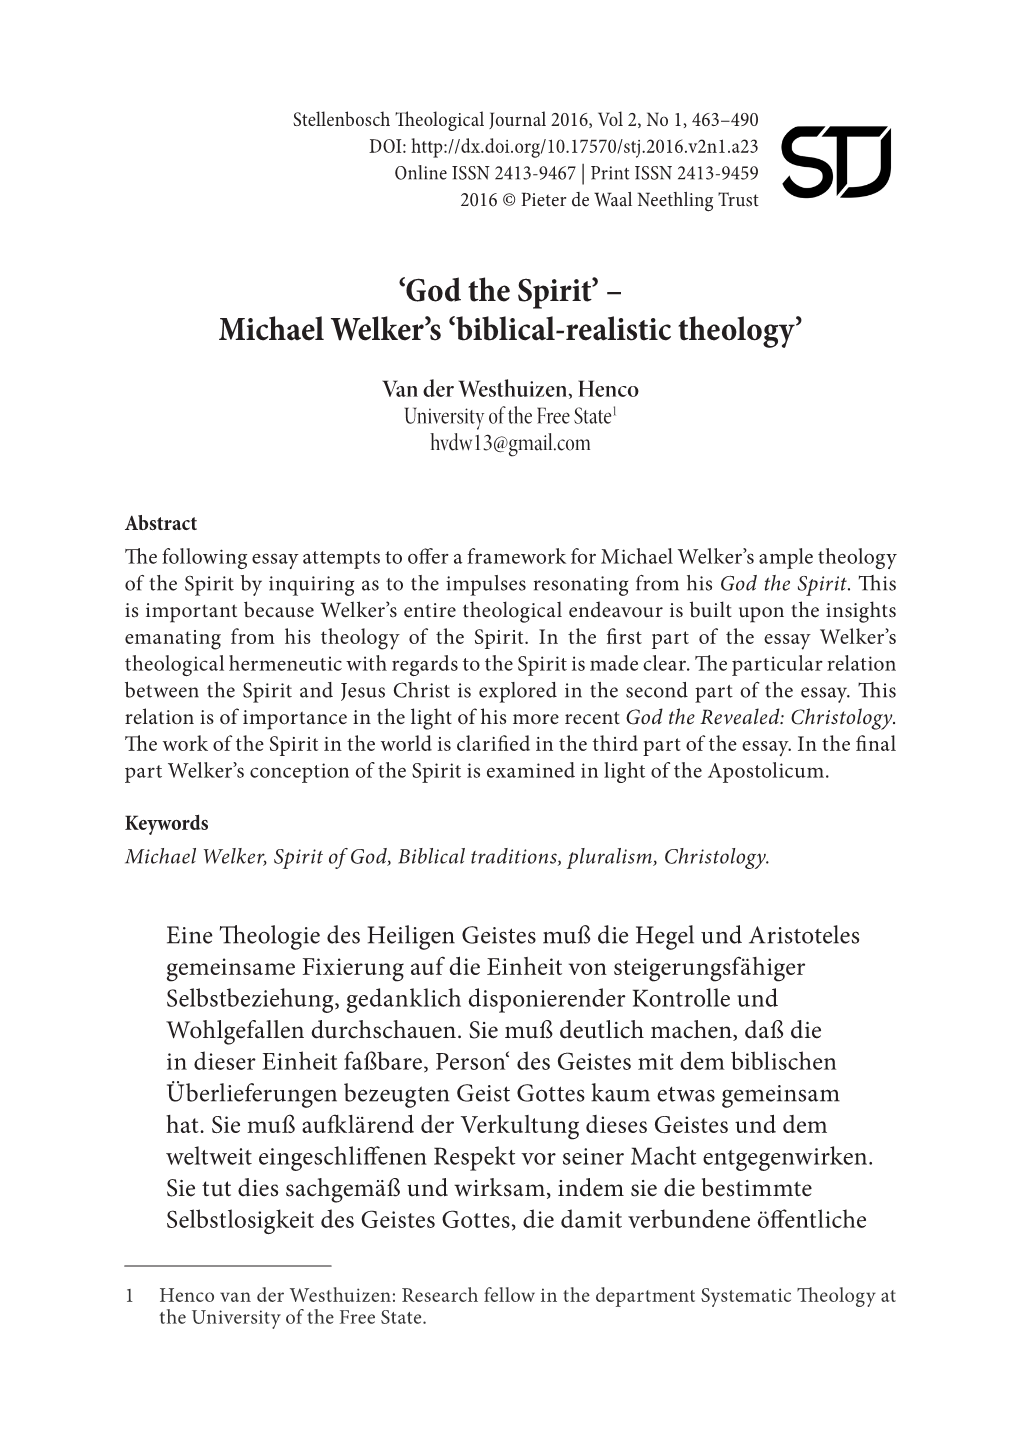 'God the Spirit' – Michael Welker's 'Biblical-Realistic Theology'